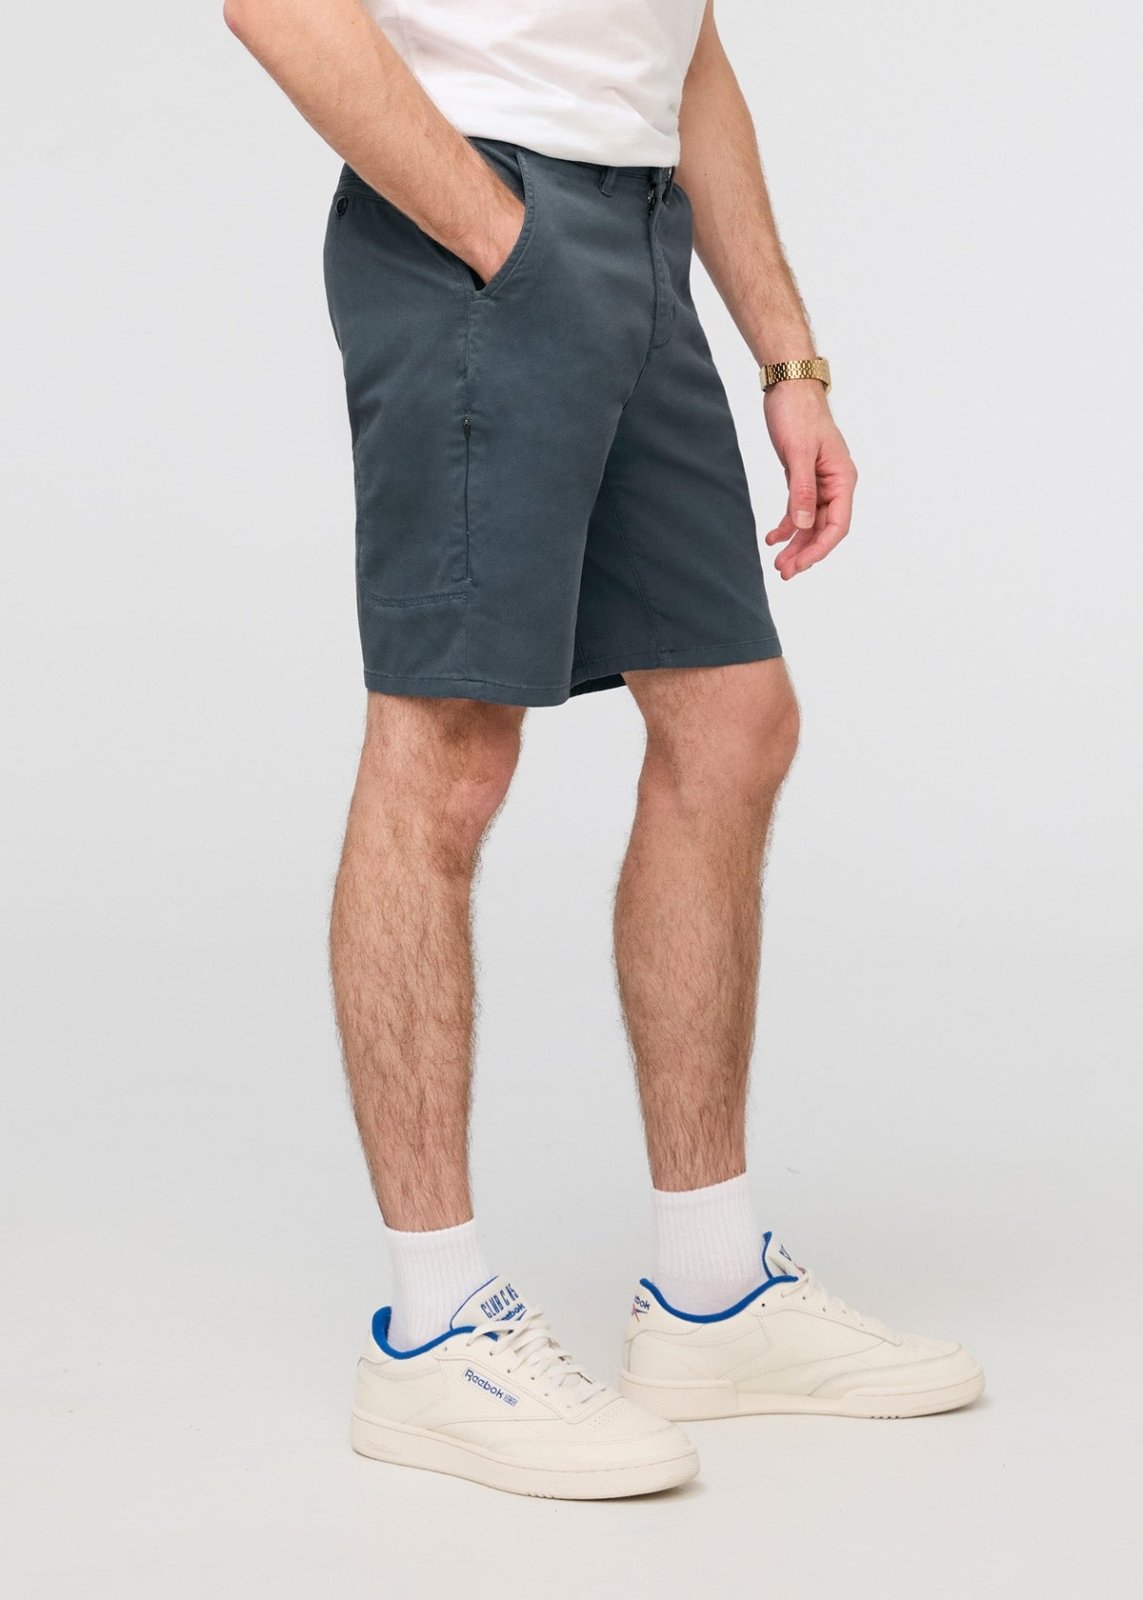 mens deep blue lightweight shorts slim fit side